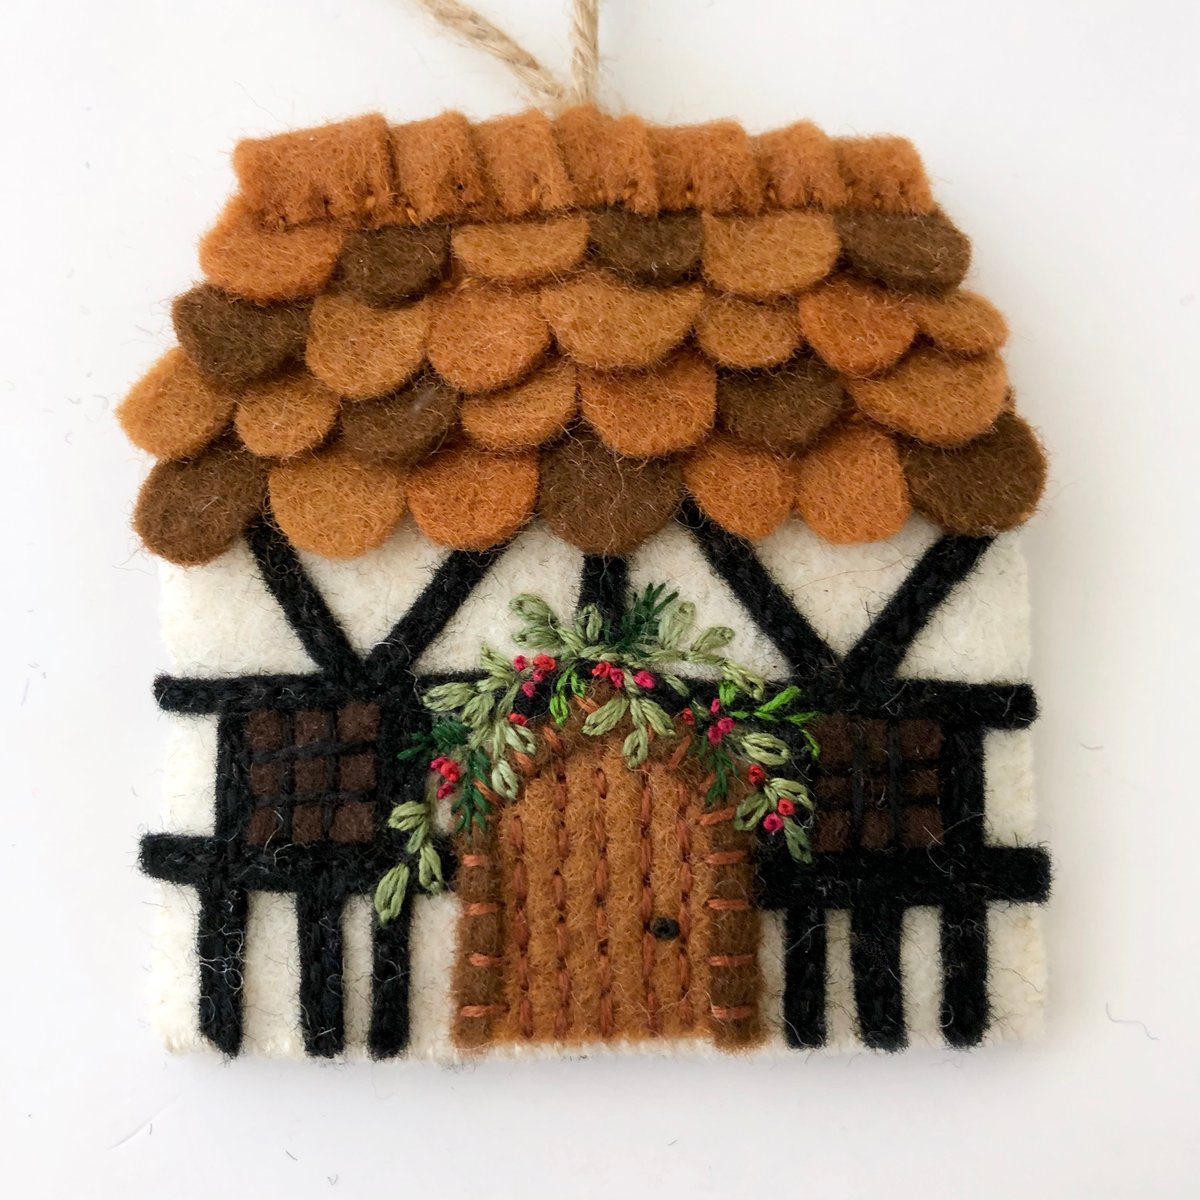 Moonlit Winter Cottage Felt Christmas Ornament – Tilly & Puffin